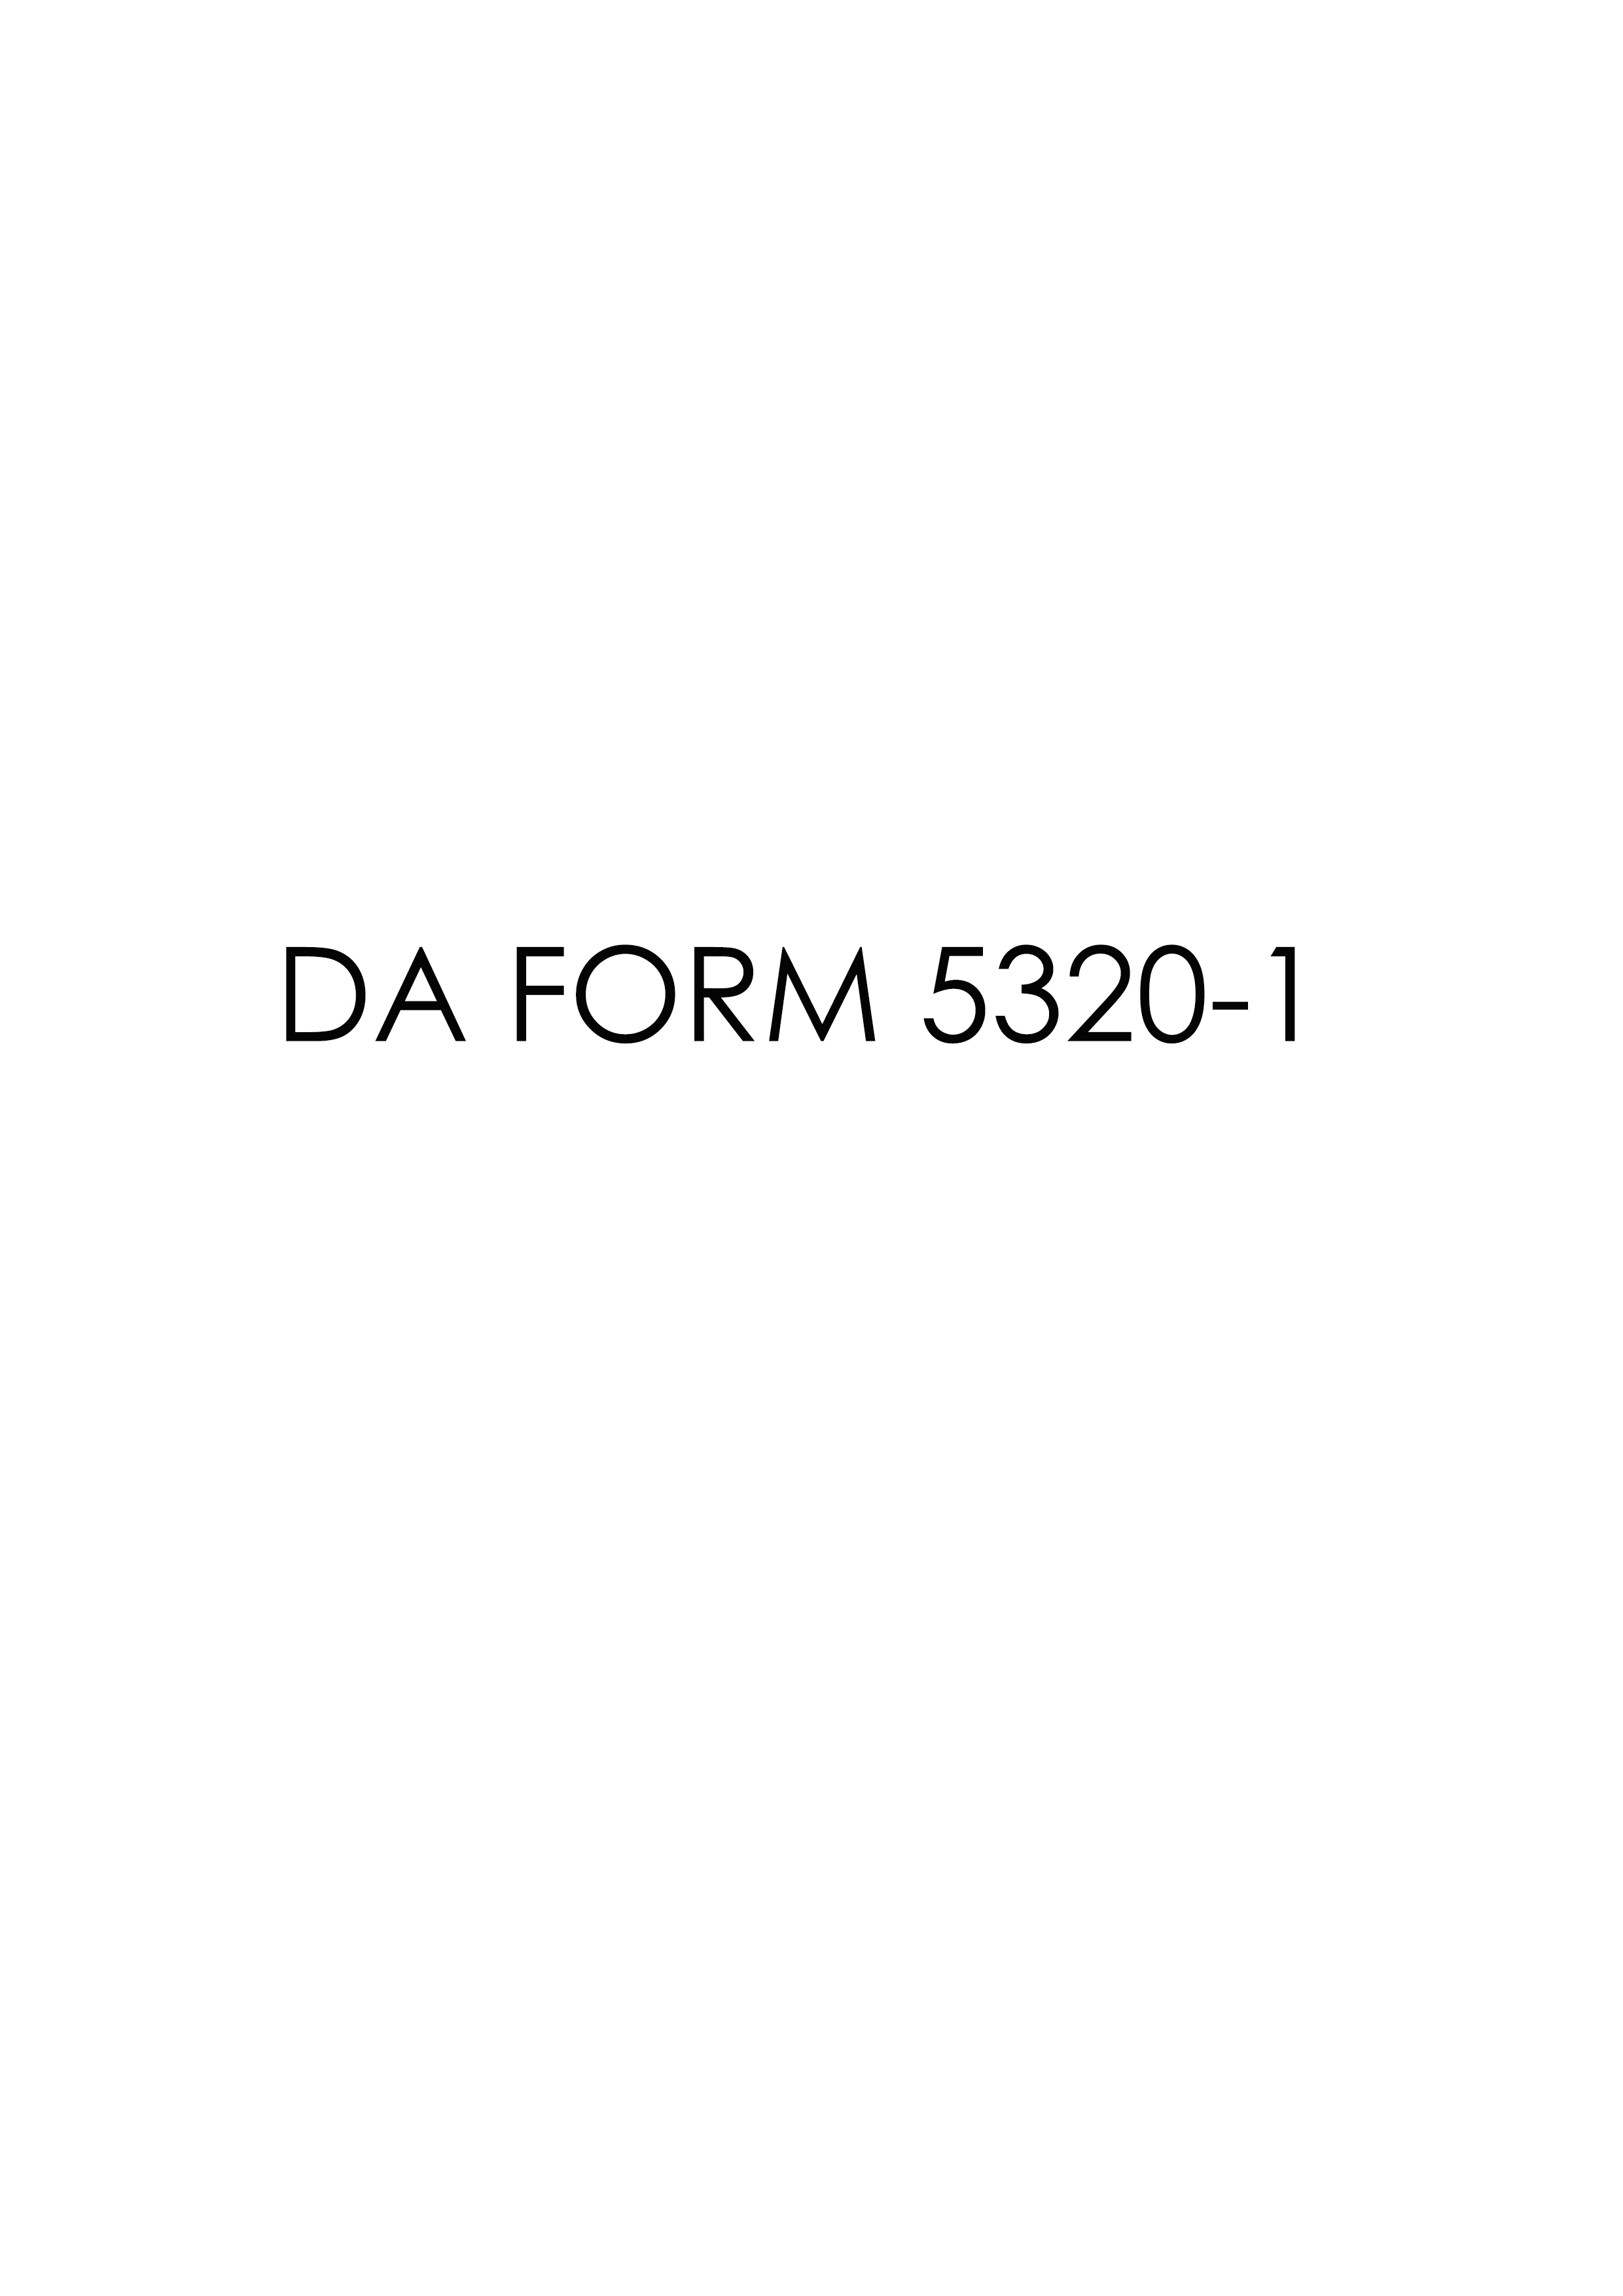 da Form 5320-1 fillable